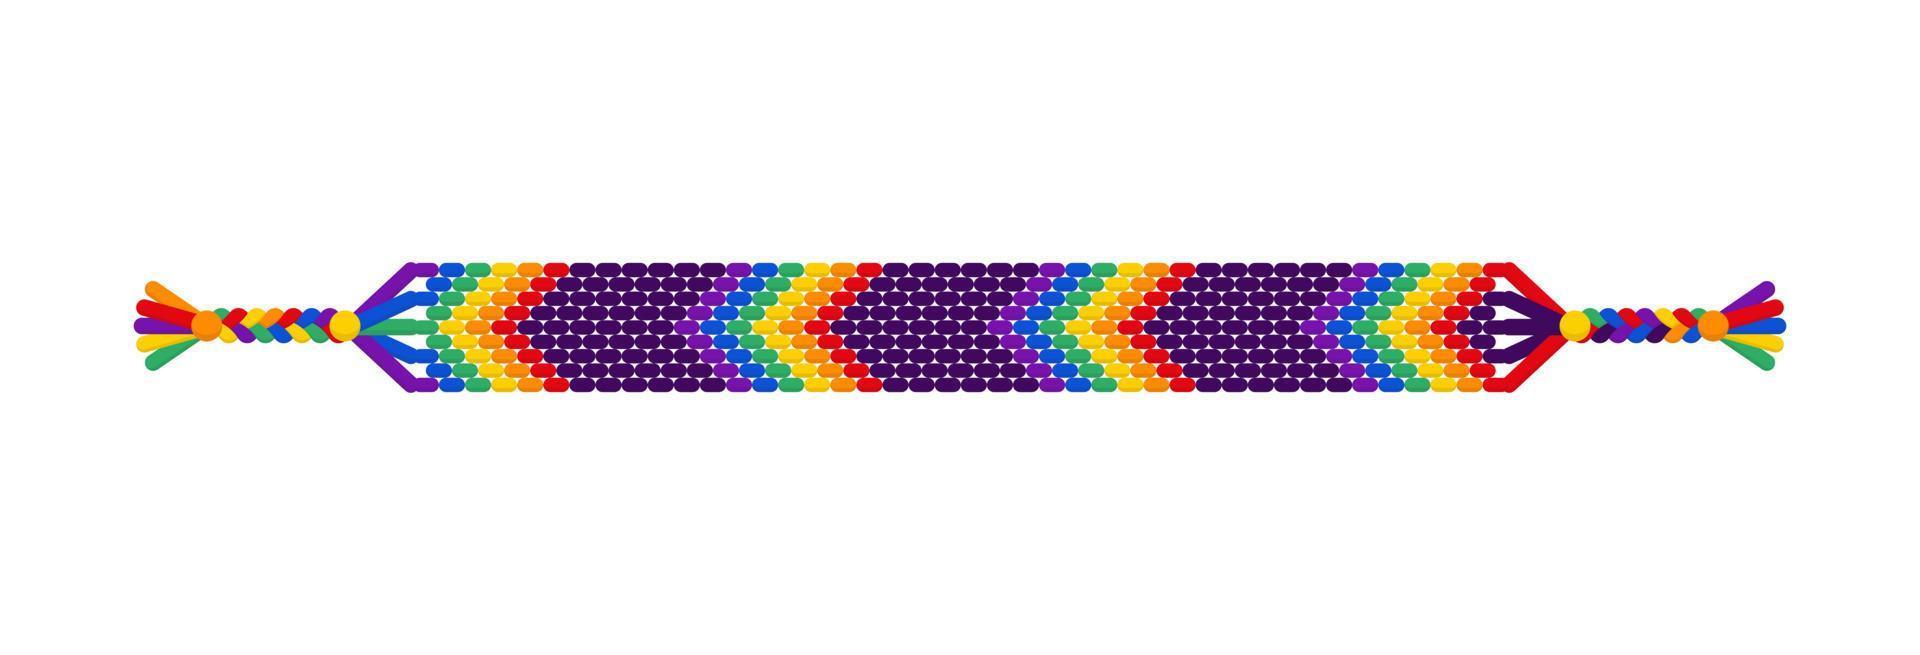 Vector rainbow lgbt handmade hippie friendship hand bracelet of threads.